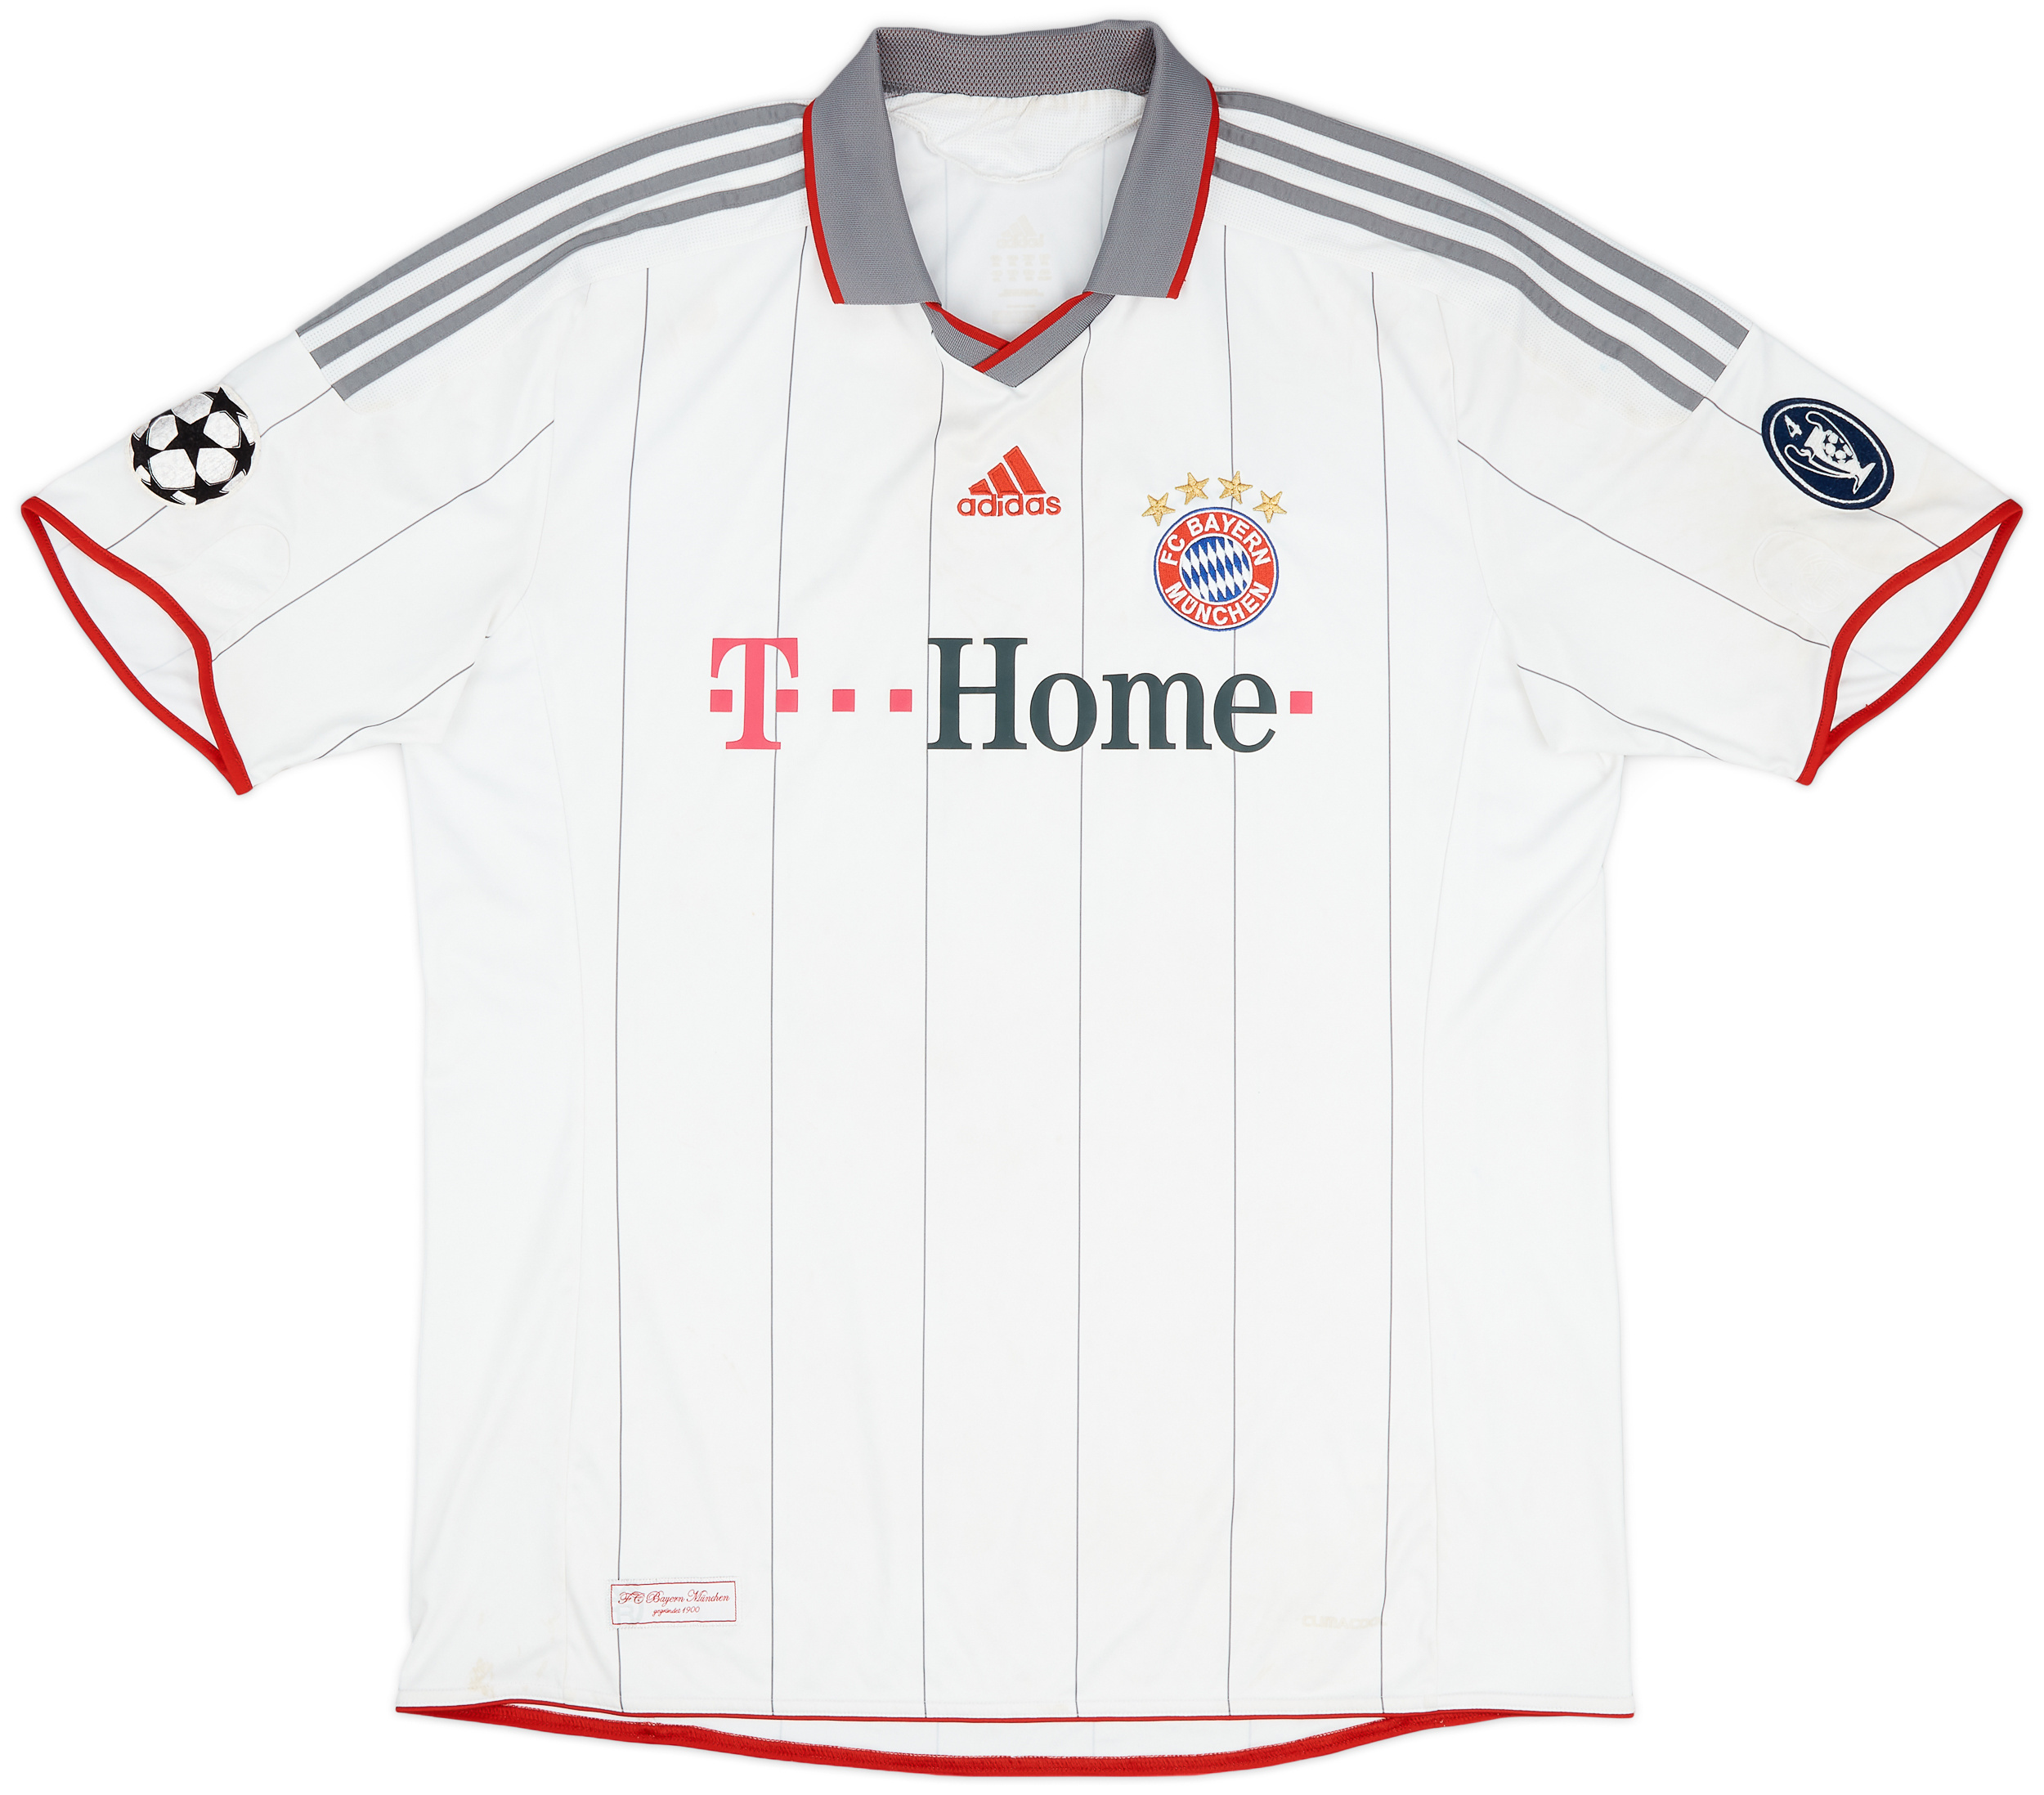 Bayern Munich  Terceira camisa (Original)